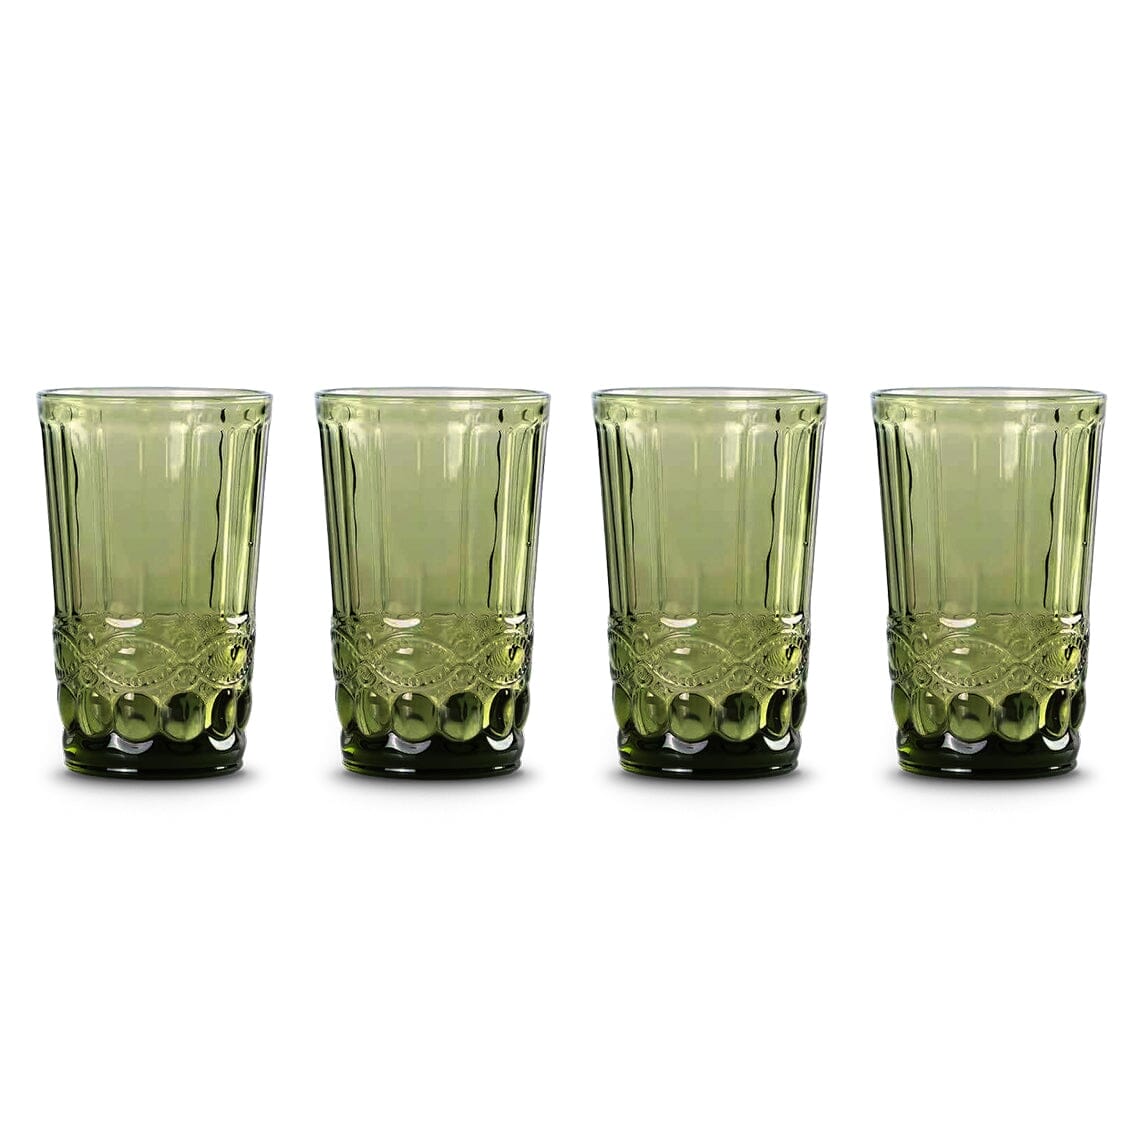 Green Highball Glasses (4) Spring Botanical Embroidered Table Linens Chefanie 